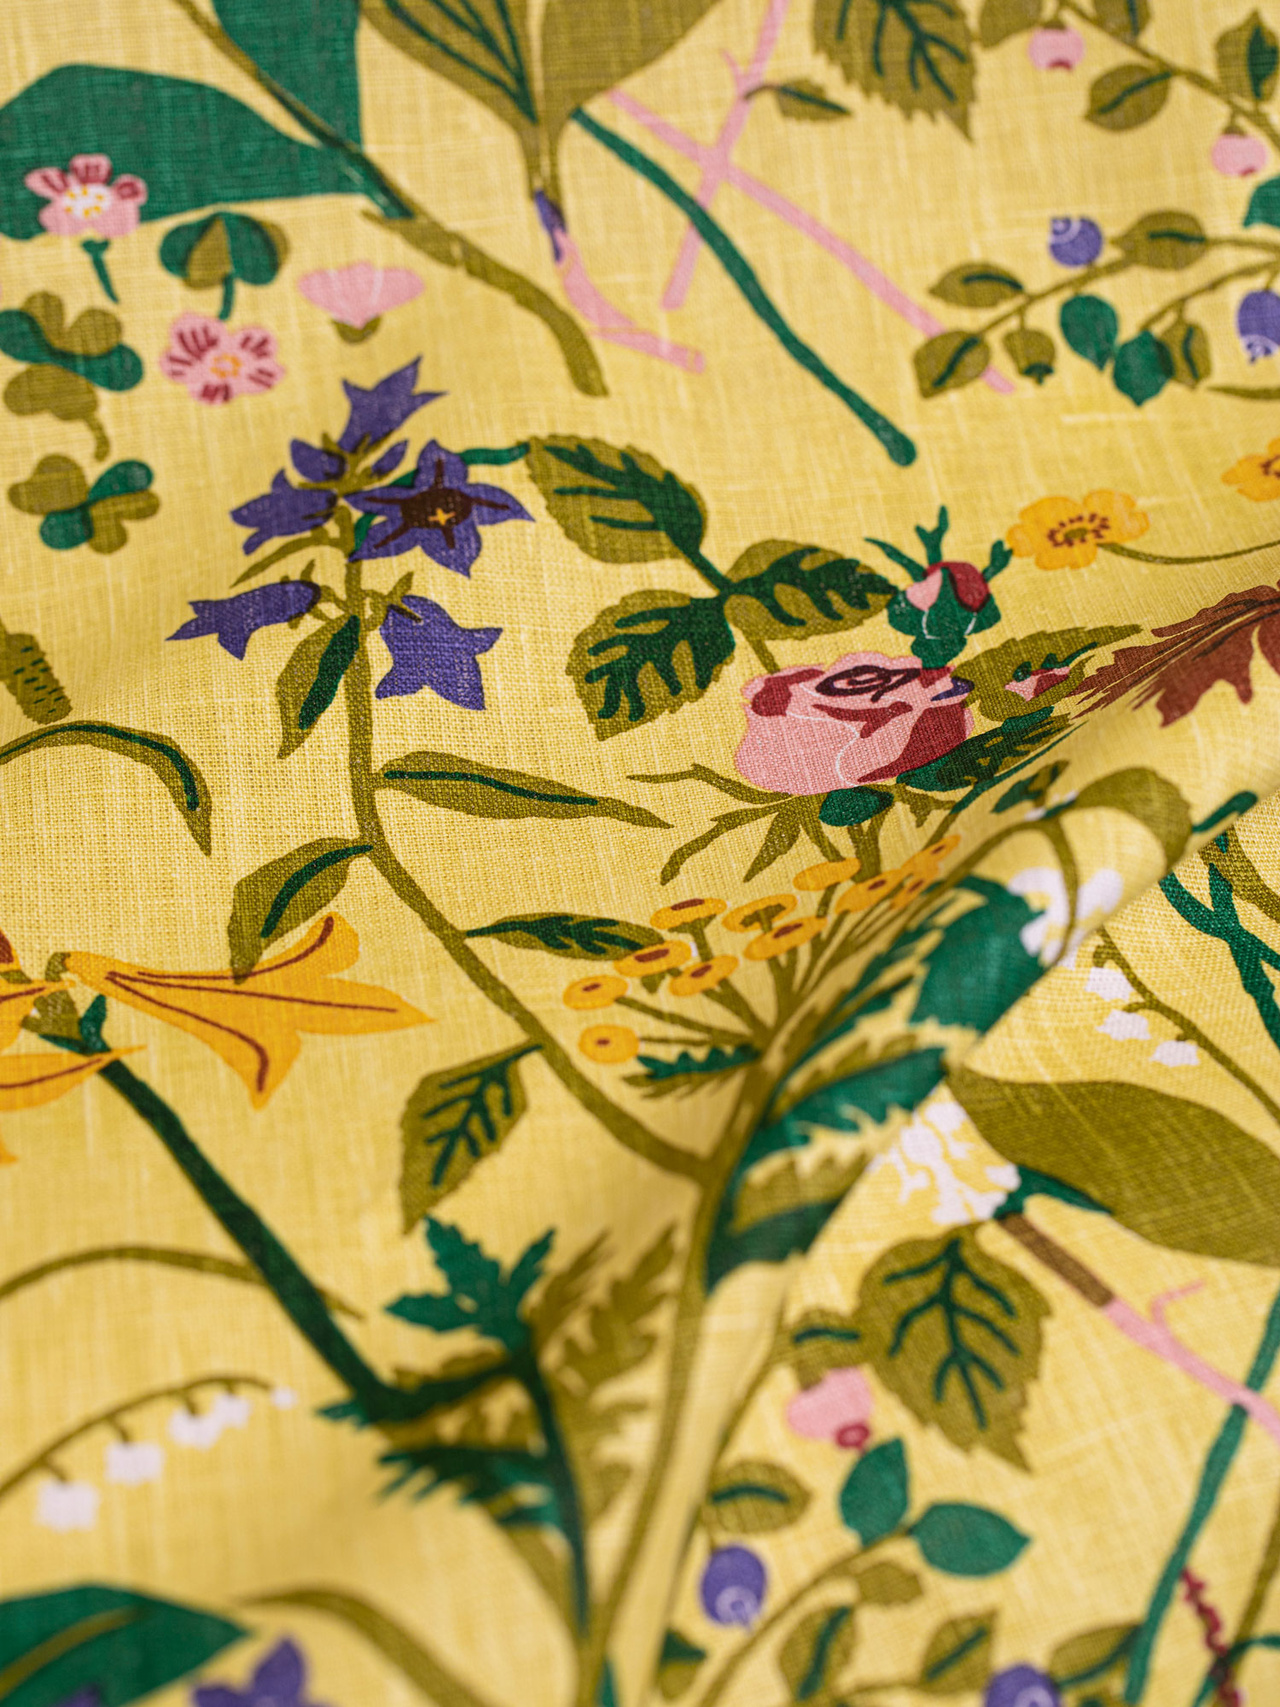 Sample Linen fabric ”Ros & Lilja” Yellow